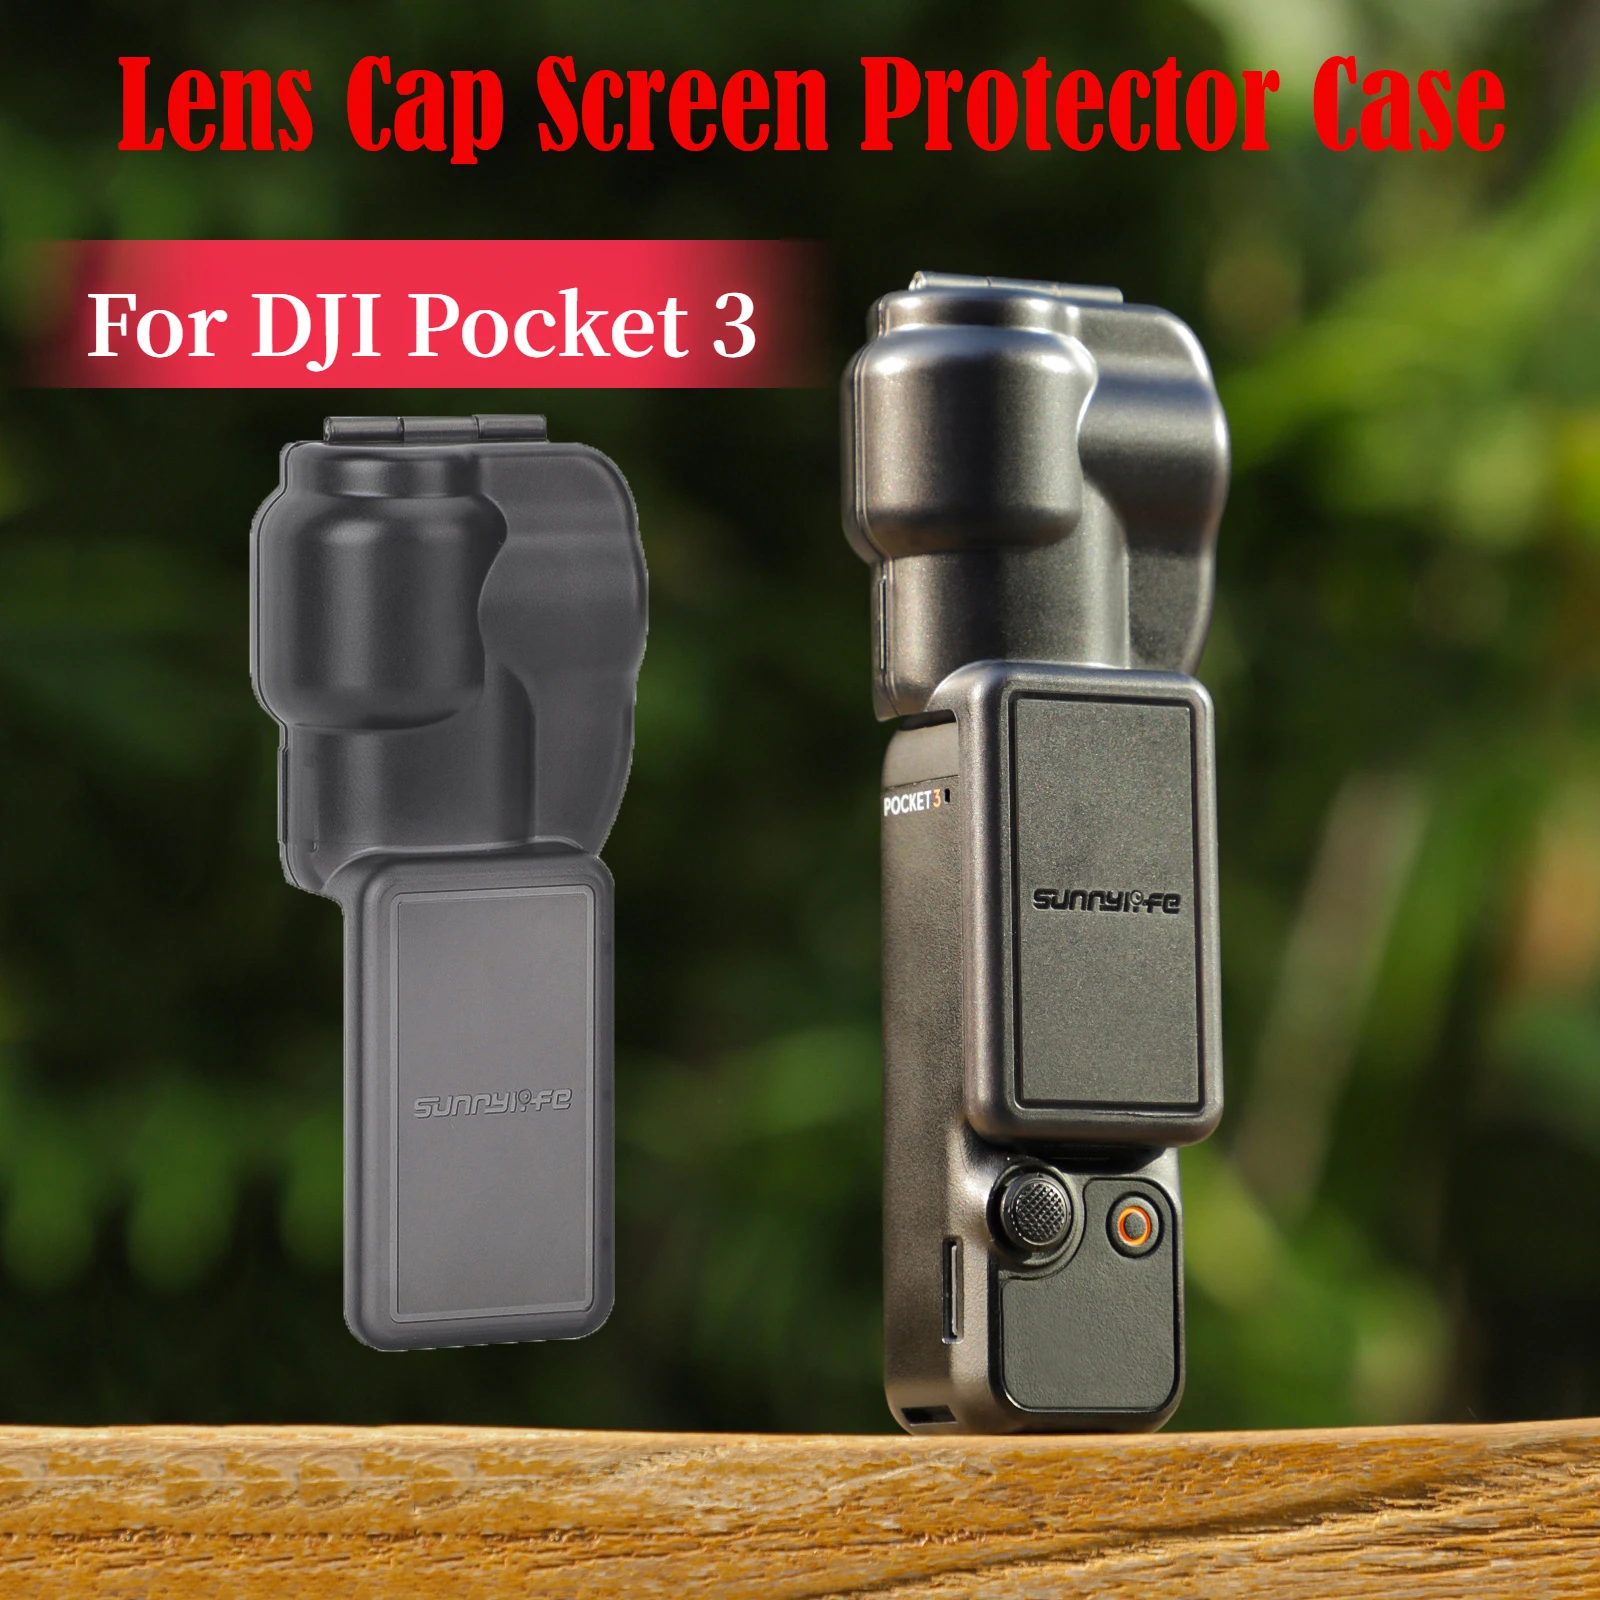 

Защитная крышка для объектива DJI Osmo Pocket 3, Внешняя защита для объектива DJI Pocket3, задняя крышка для подвески, запасные части, аксессуары для камеры